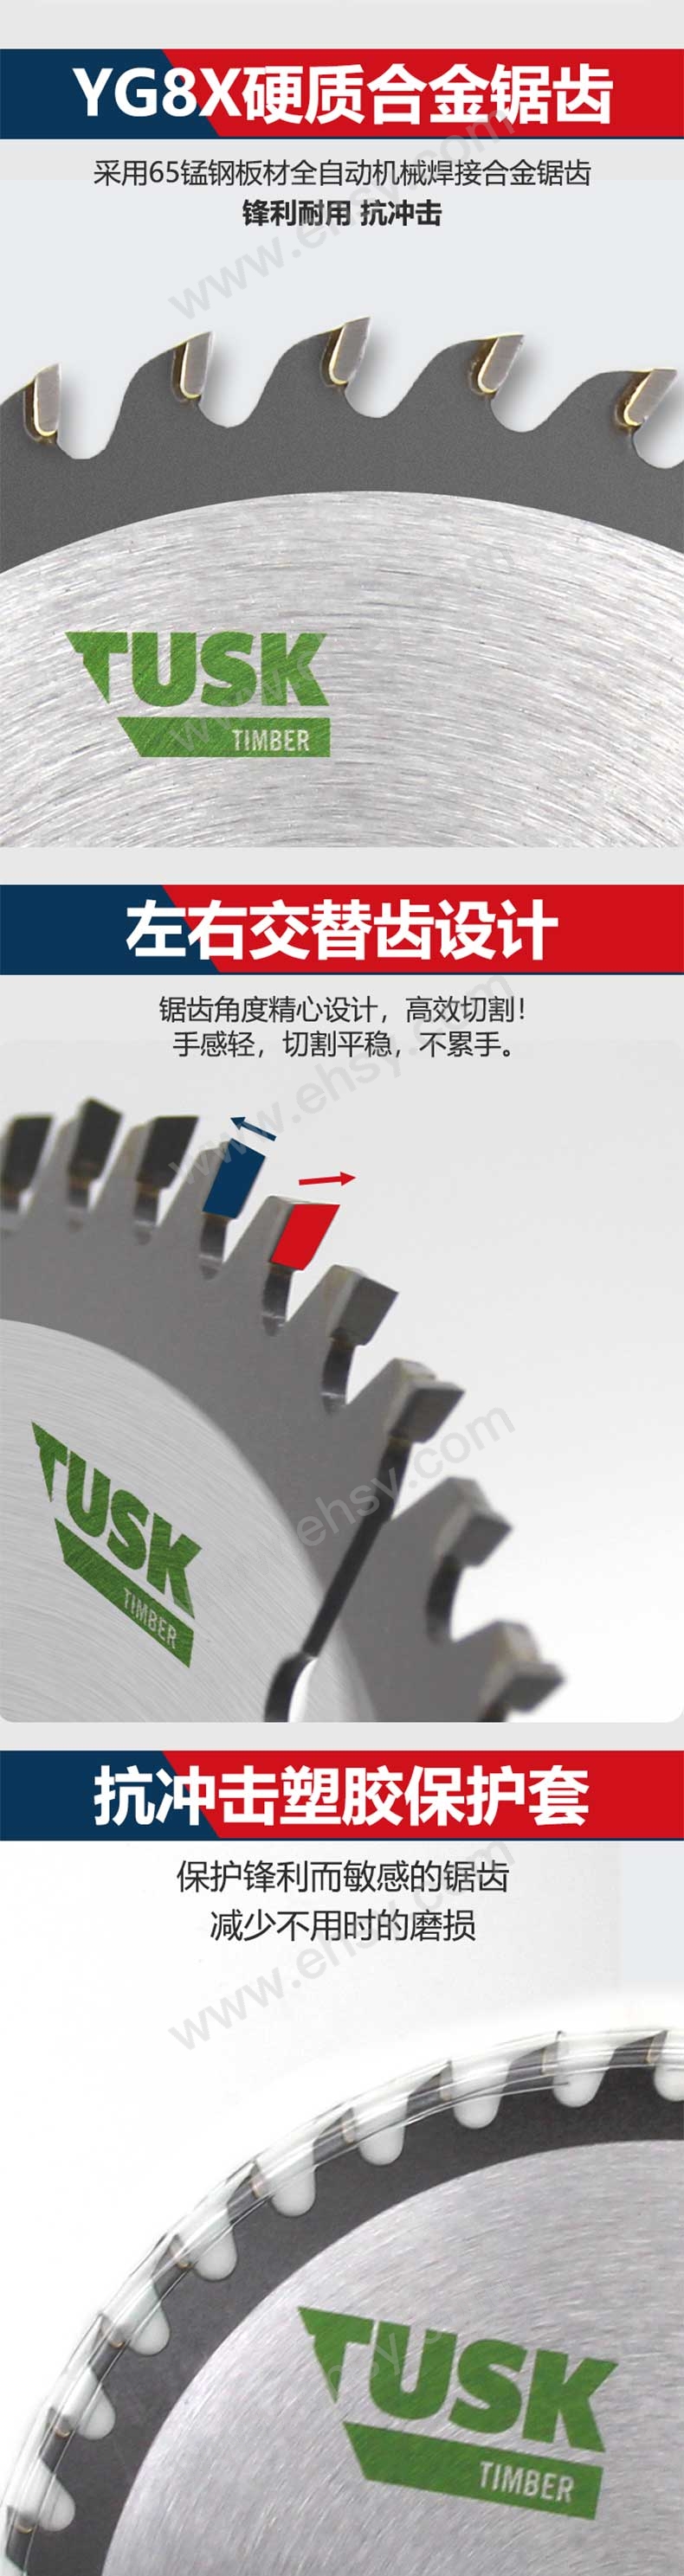 TUSK木工切割片详情页_03.jpg